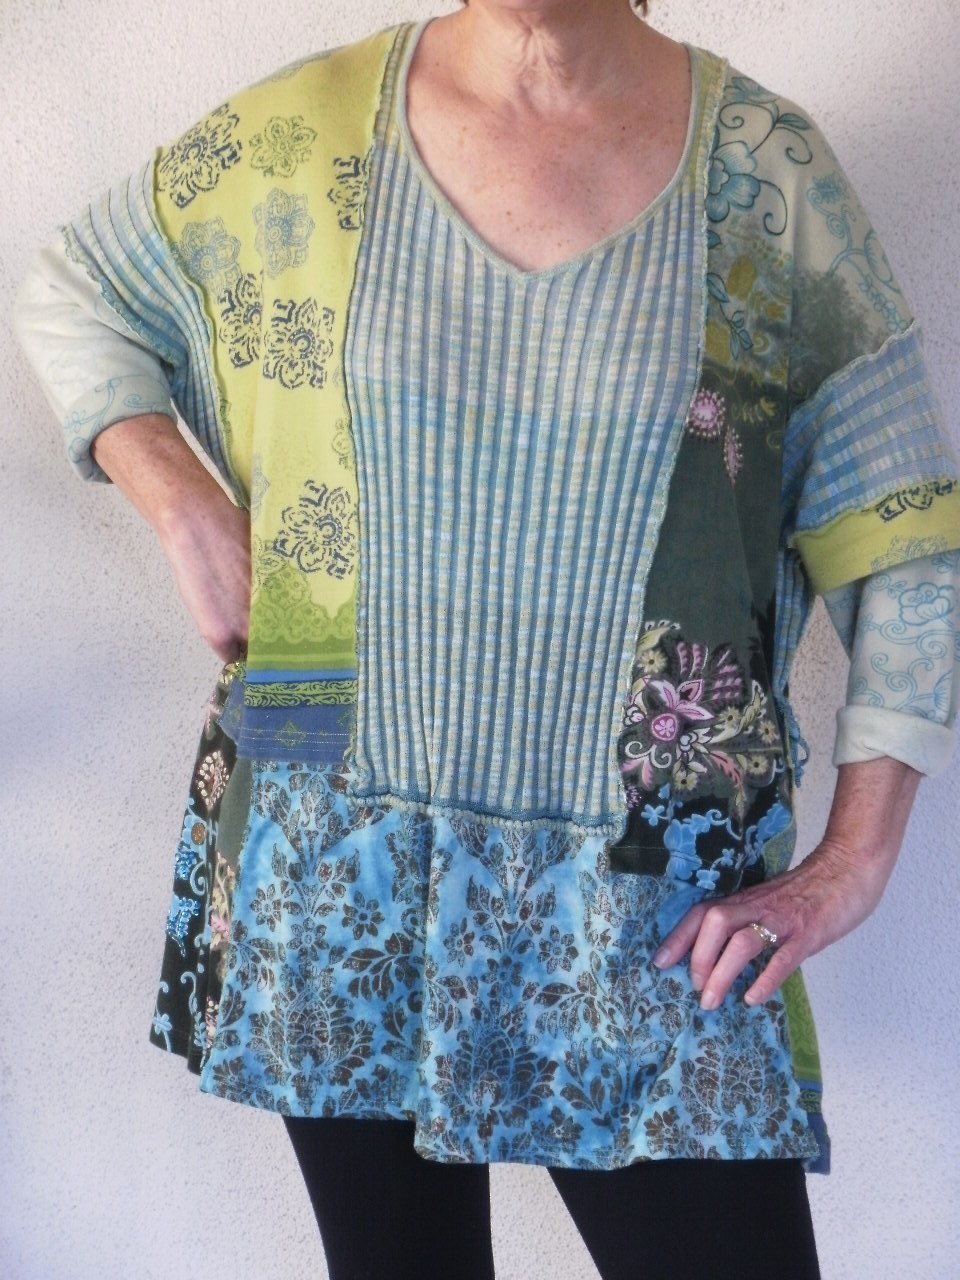 Sarah H. Jackson, Textile Artist: Reconstructed Clothing